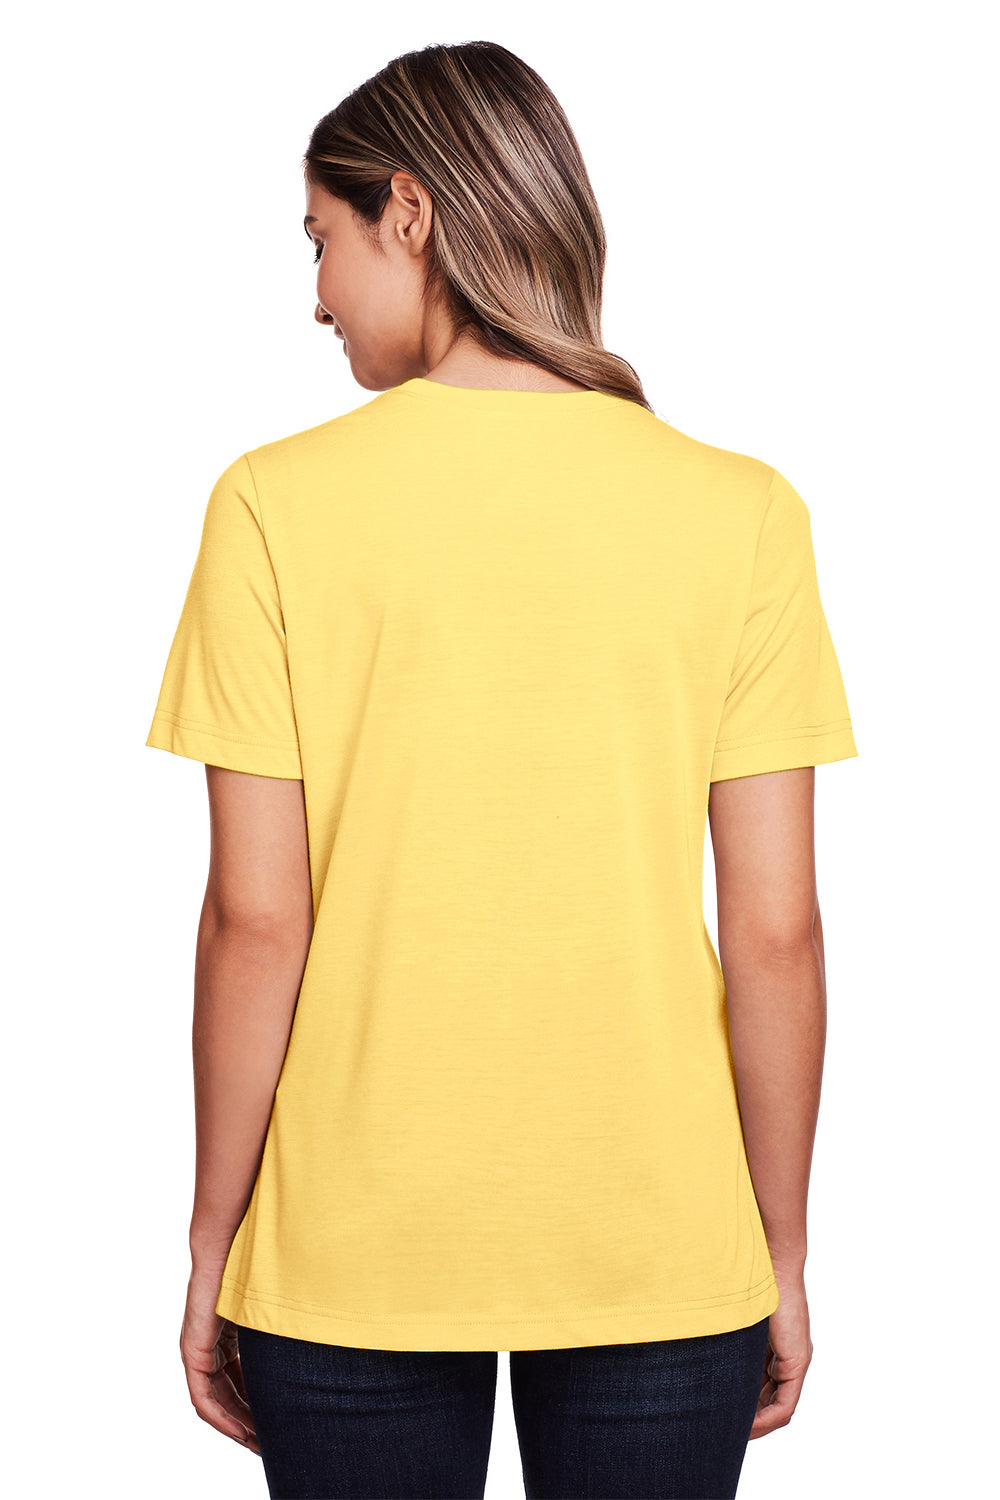 Core 365 CE111W Womens Fusion ChromaSoft Performance Moisture Wicking Short Sleeve Scoop Neck T-Shirt Gold Back